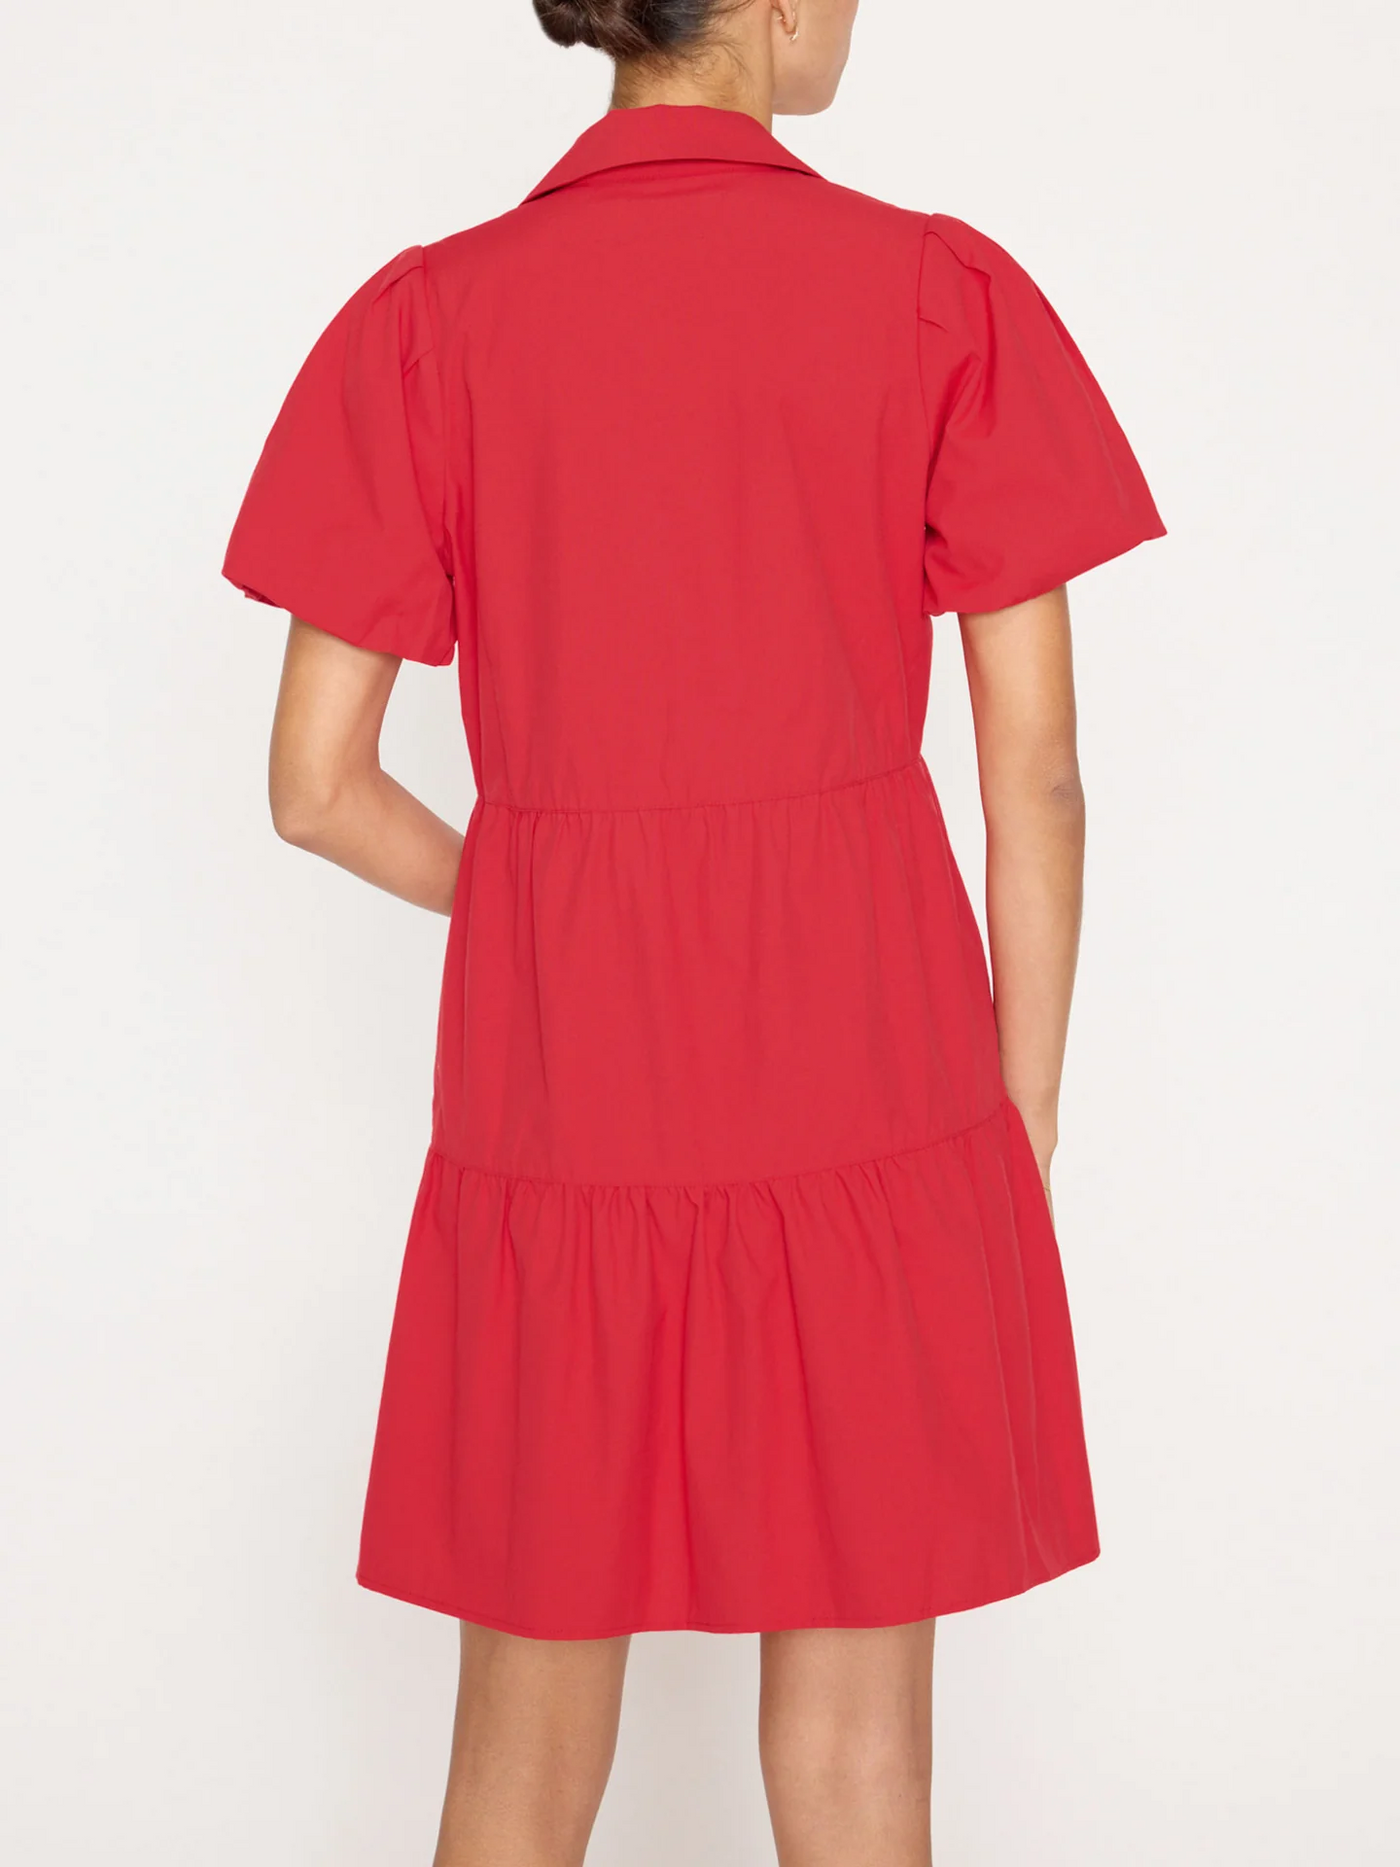 HAVANA MINI DRESS IN CARMINE RED - Romi Boutique